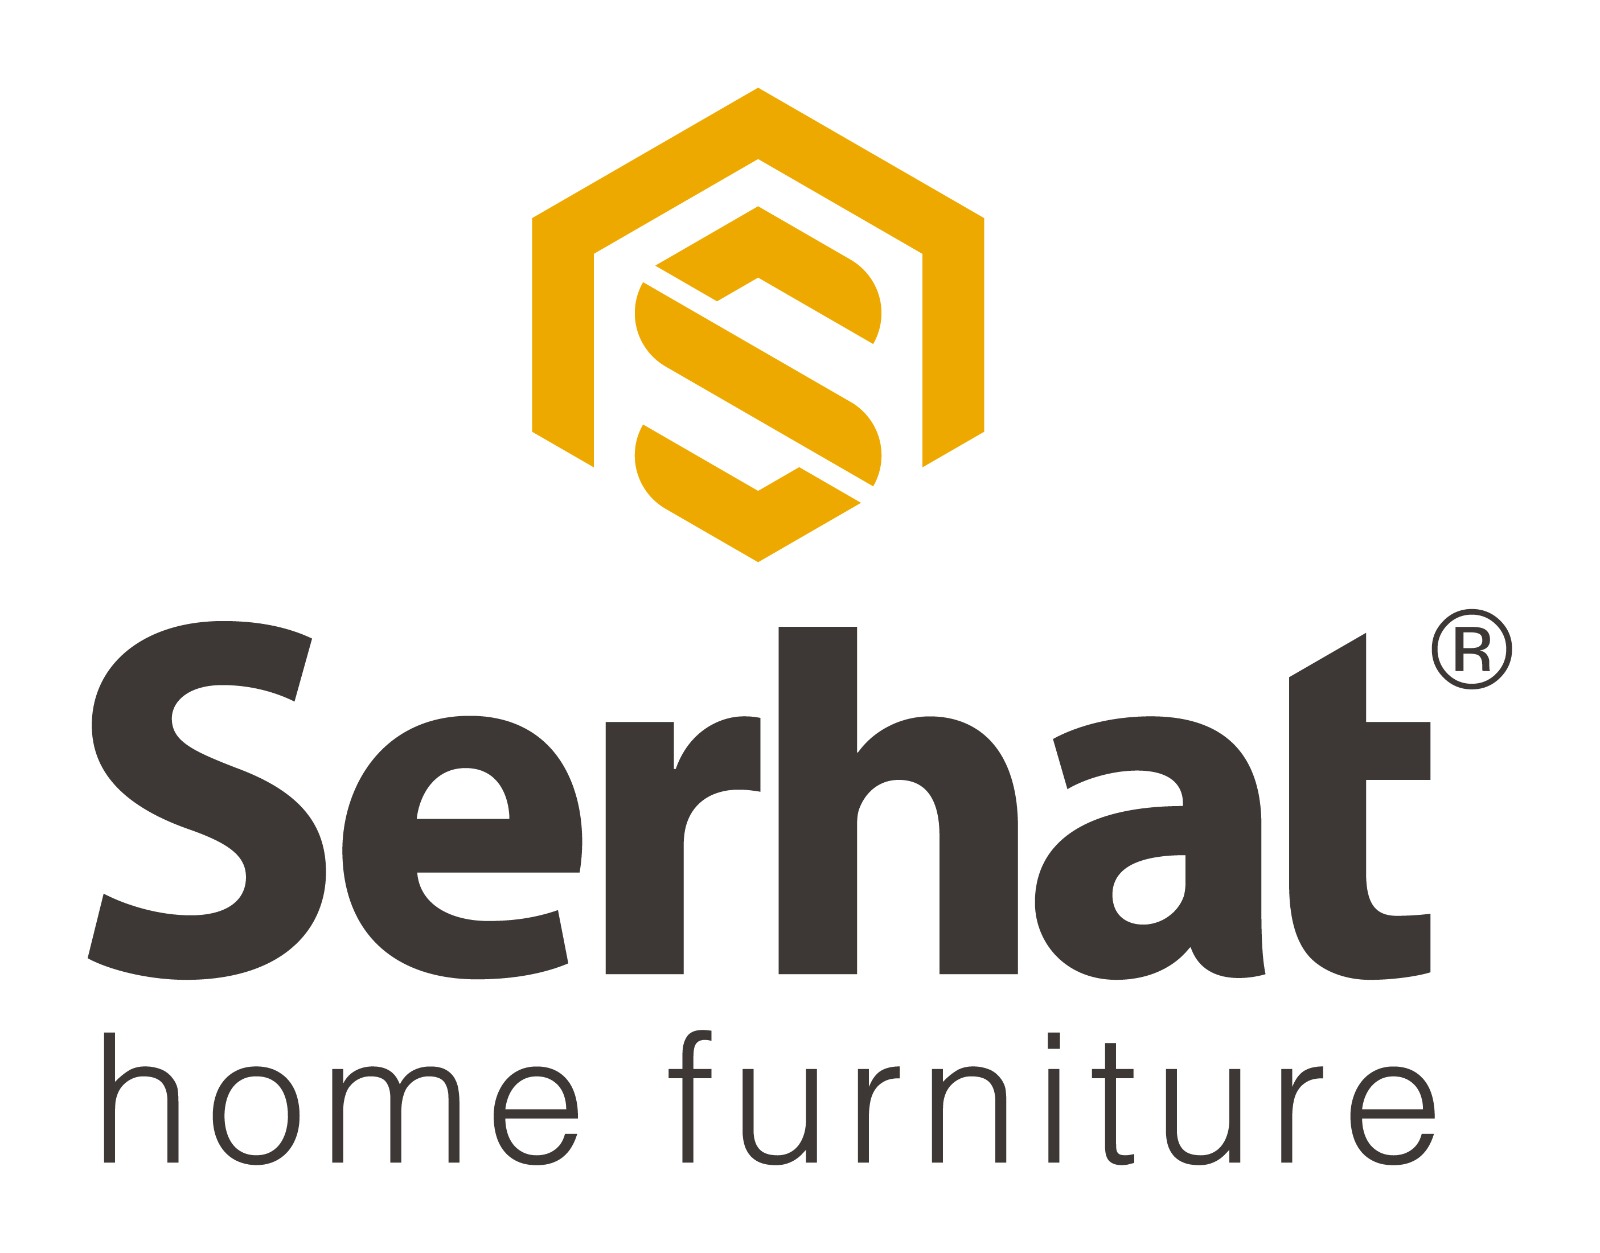 SERHAT HOME FURNITURE Logo